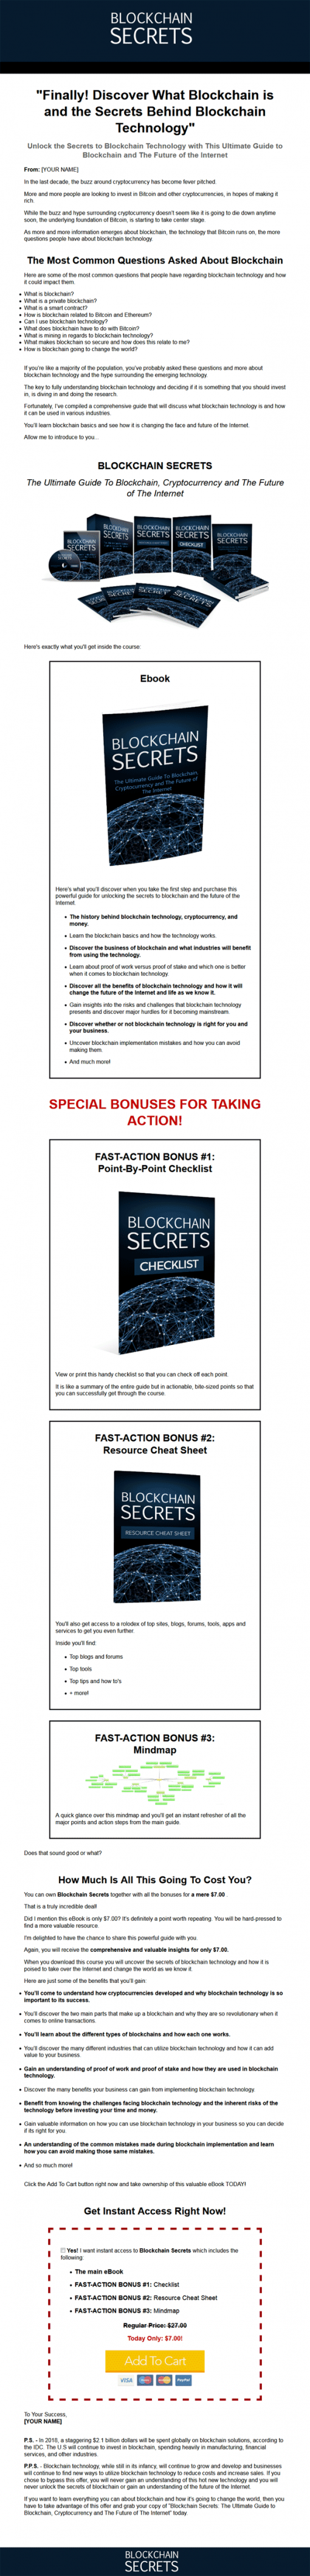 BlockChain Secrets Ebook and Videos MRR